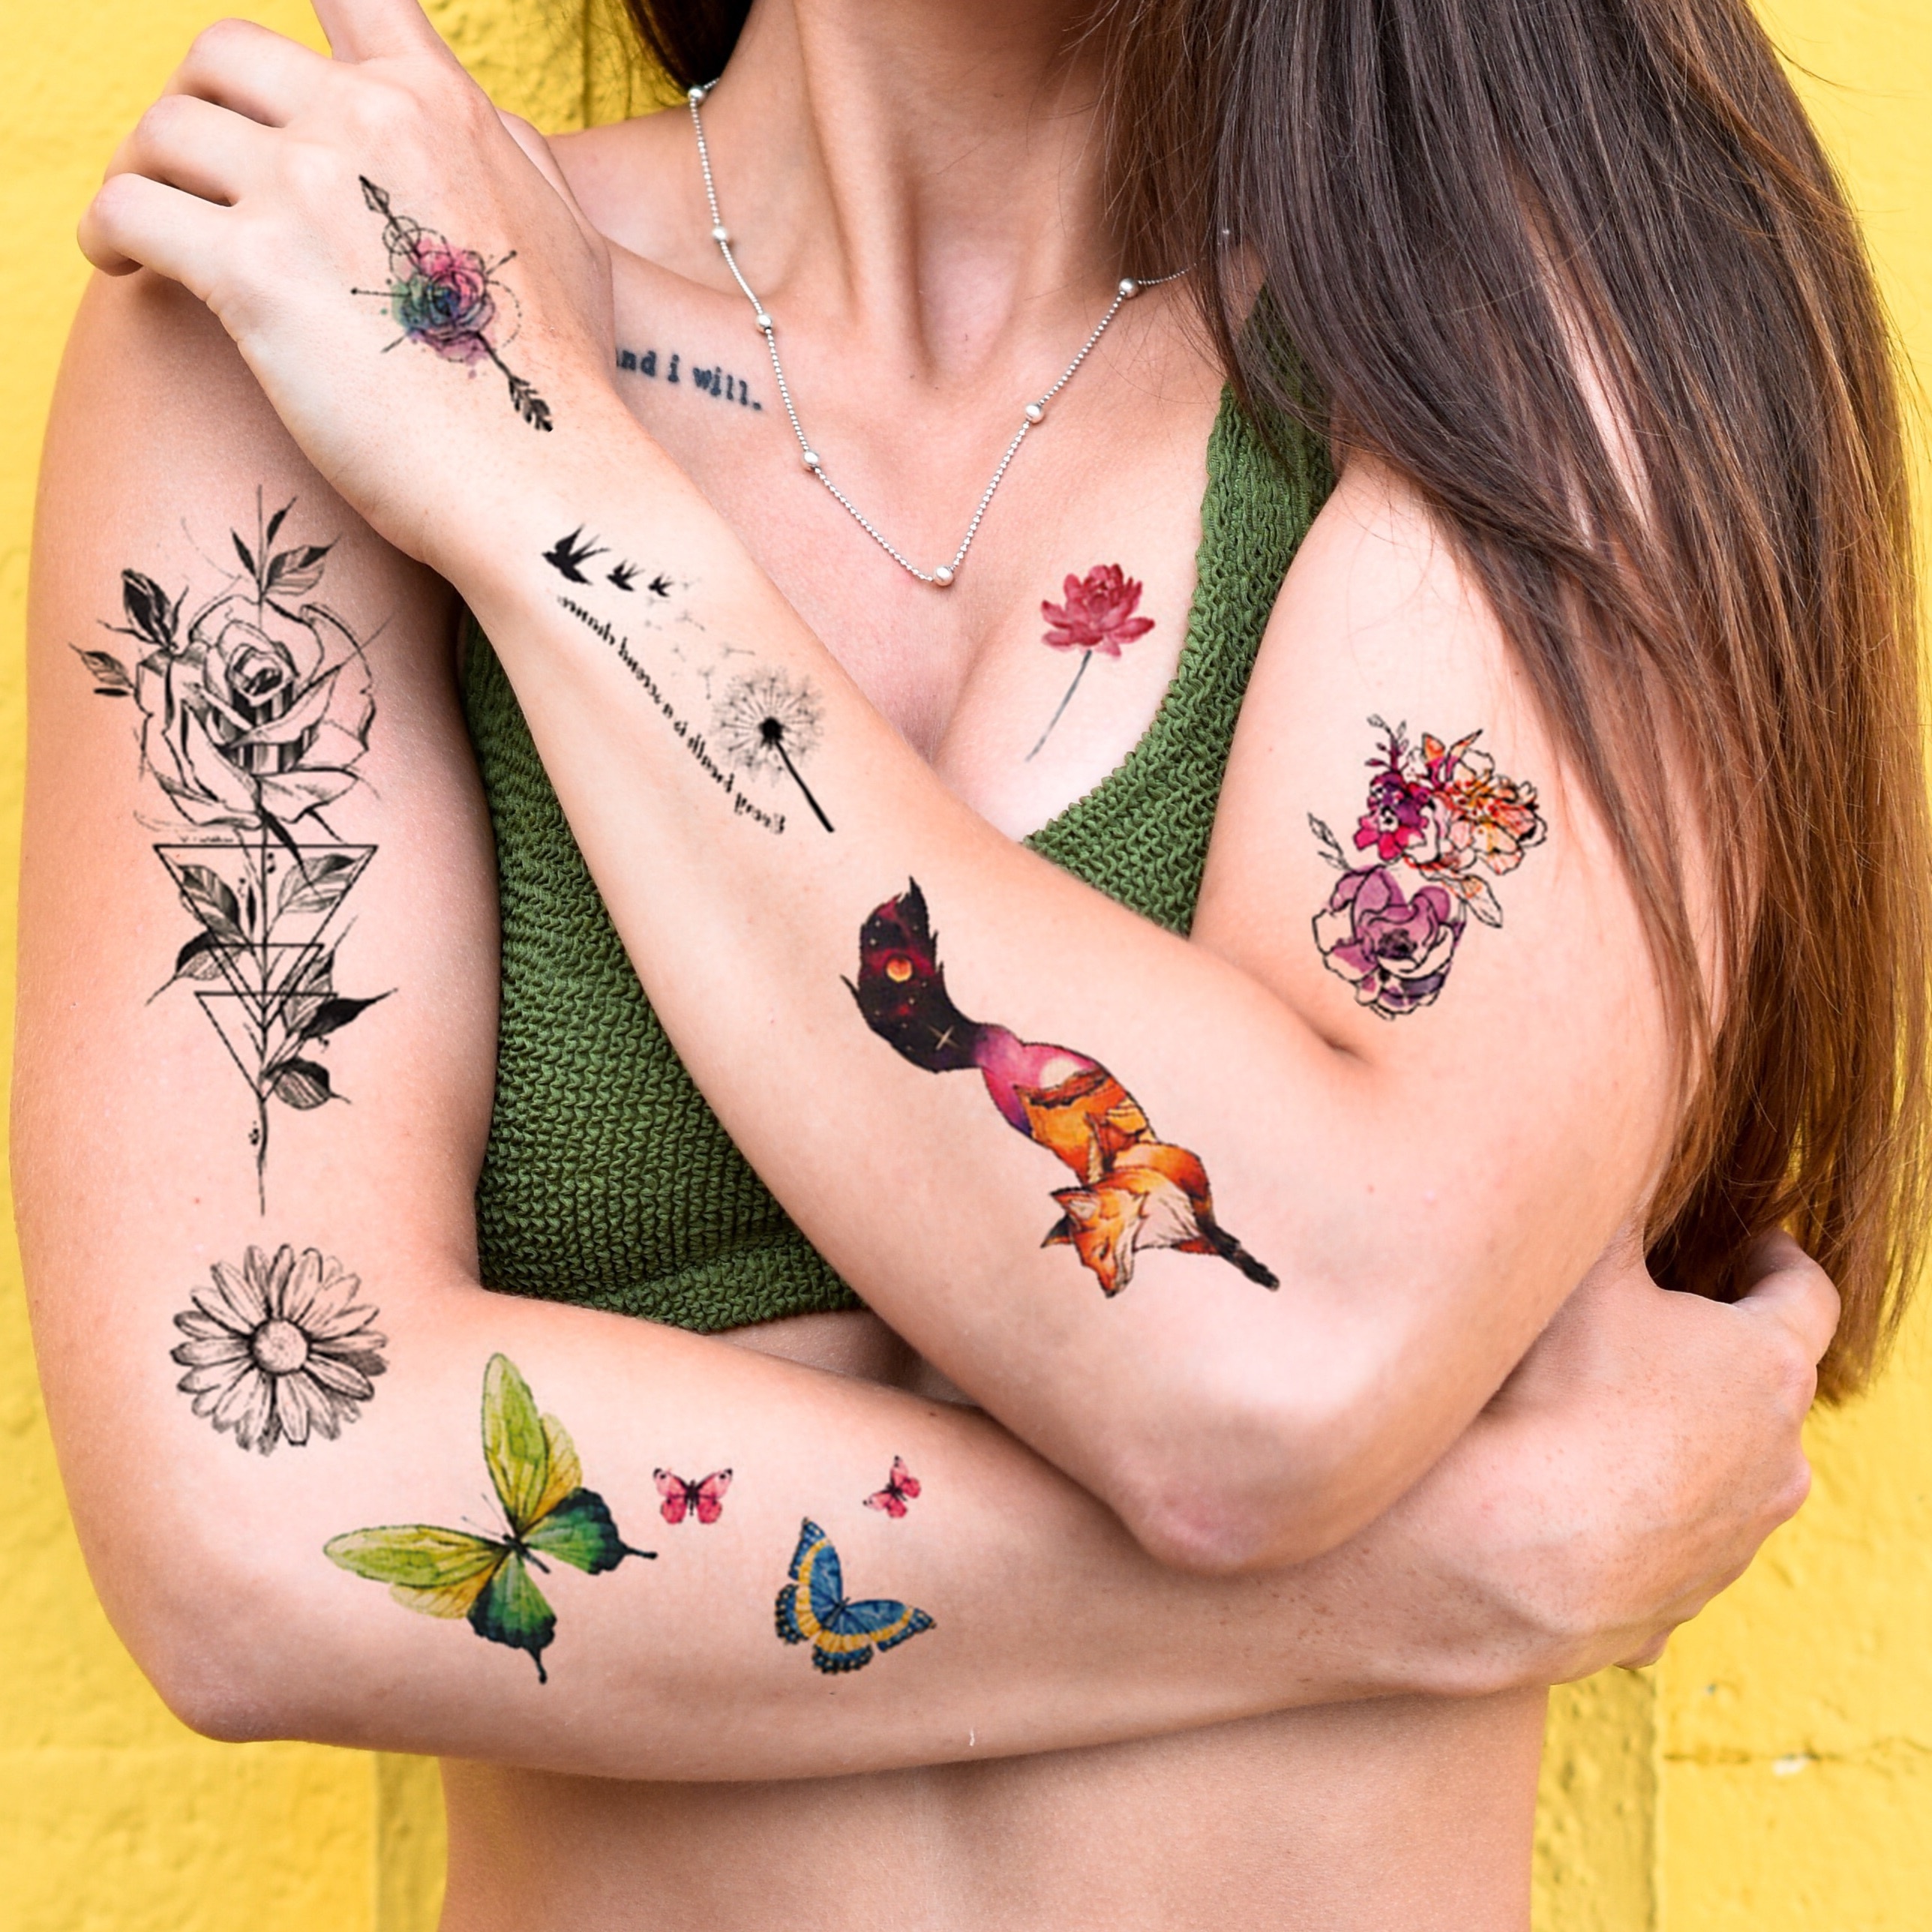 10 Sheets Tiny Temporary Tattoo Feather Bird for Men Women 